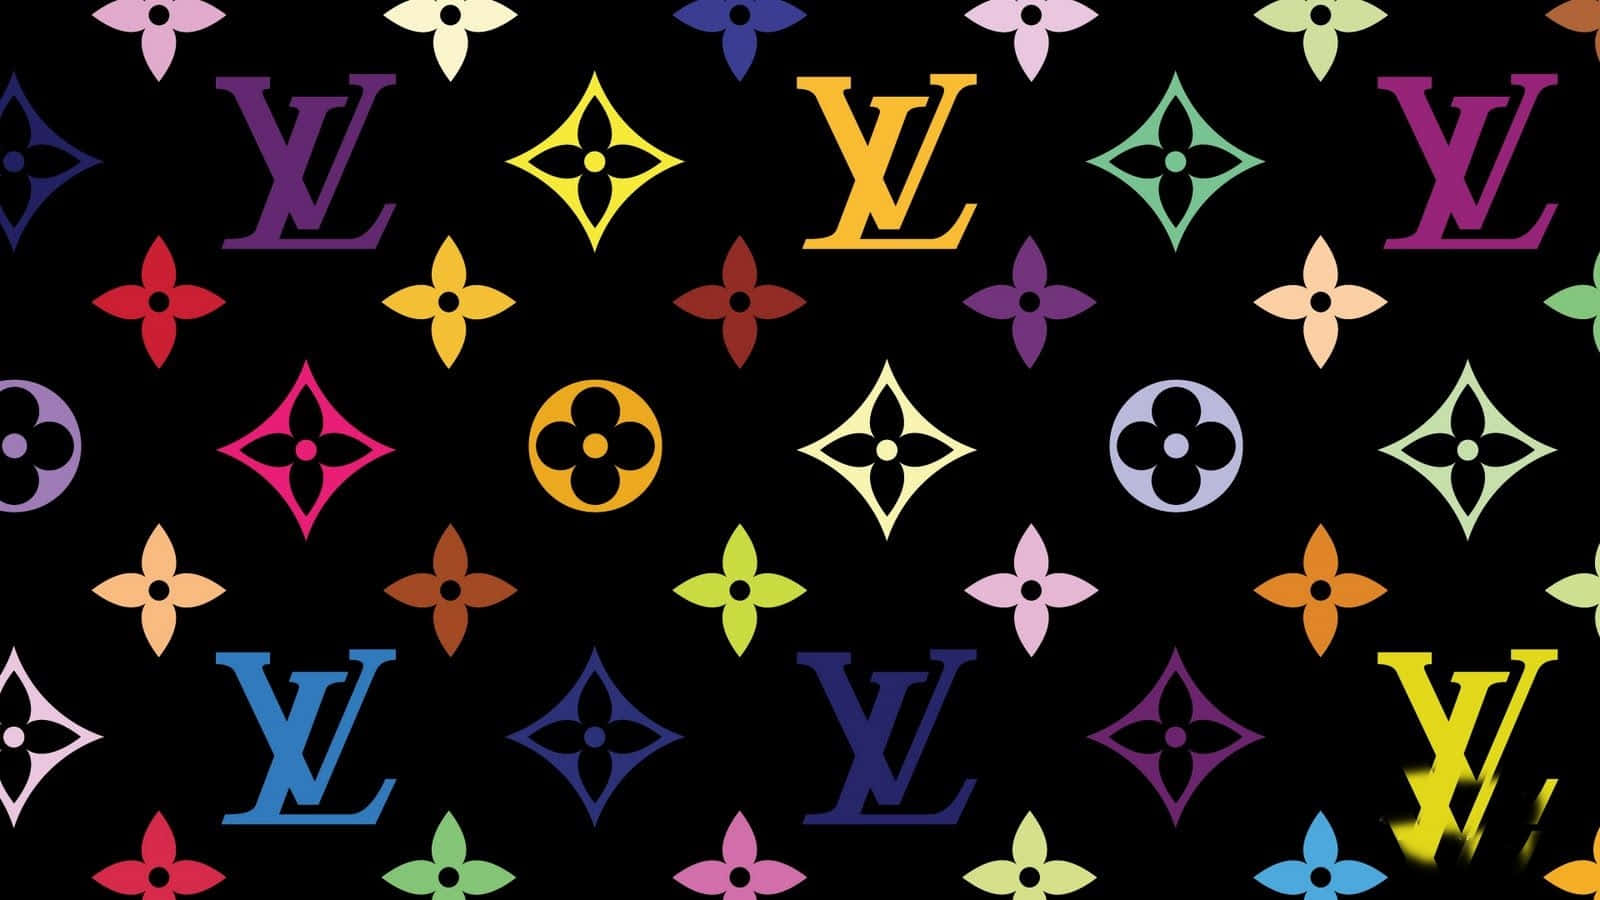 100+] Louis Vuitton Logo Wallpapers